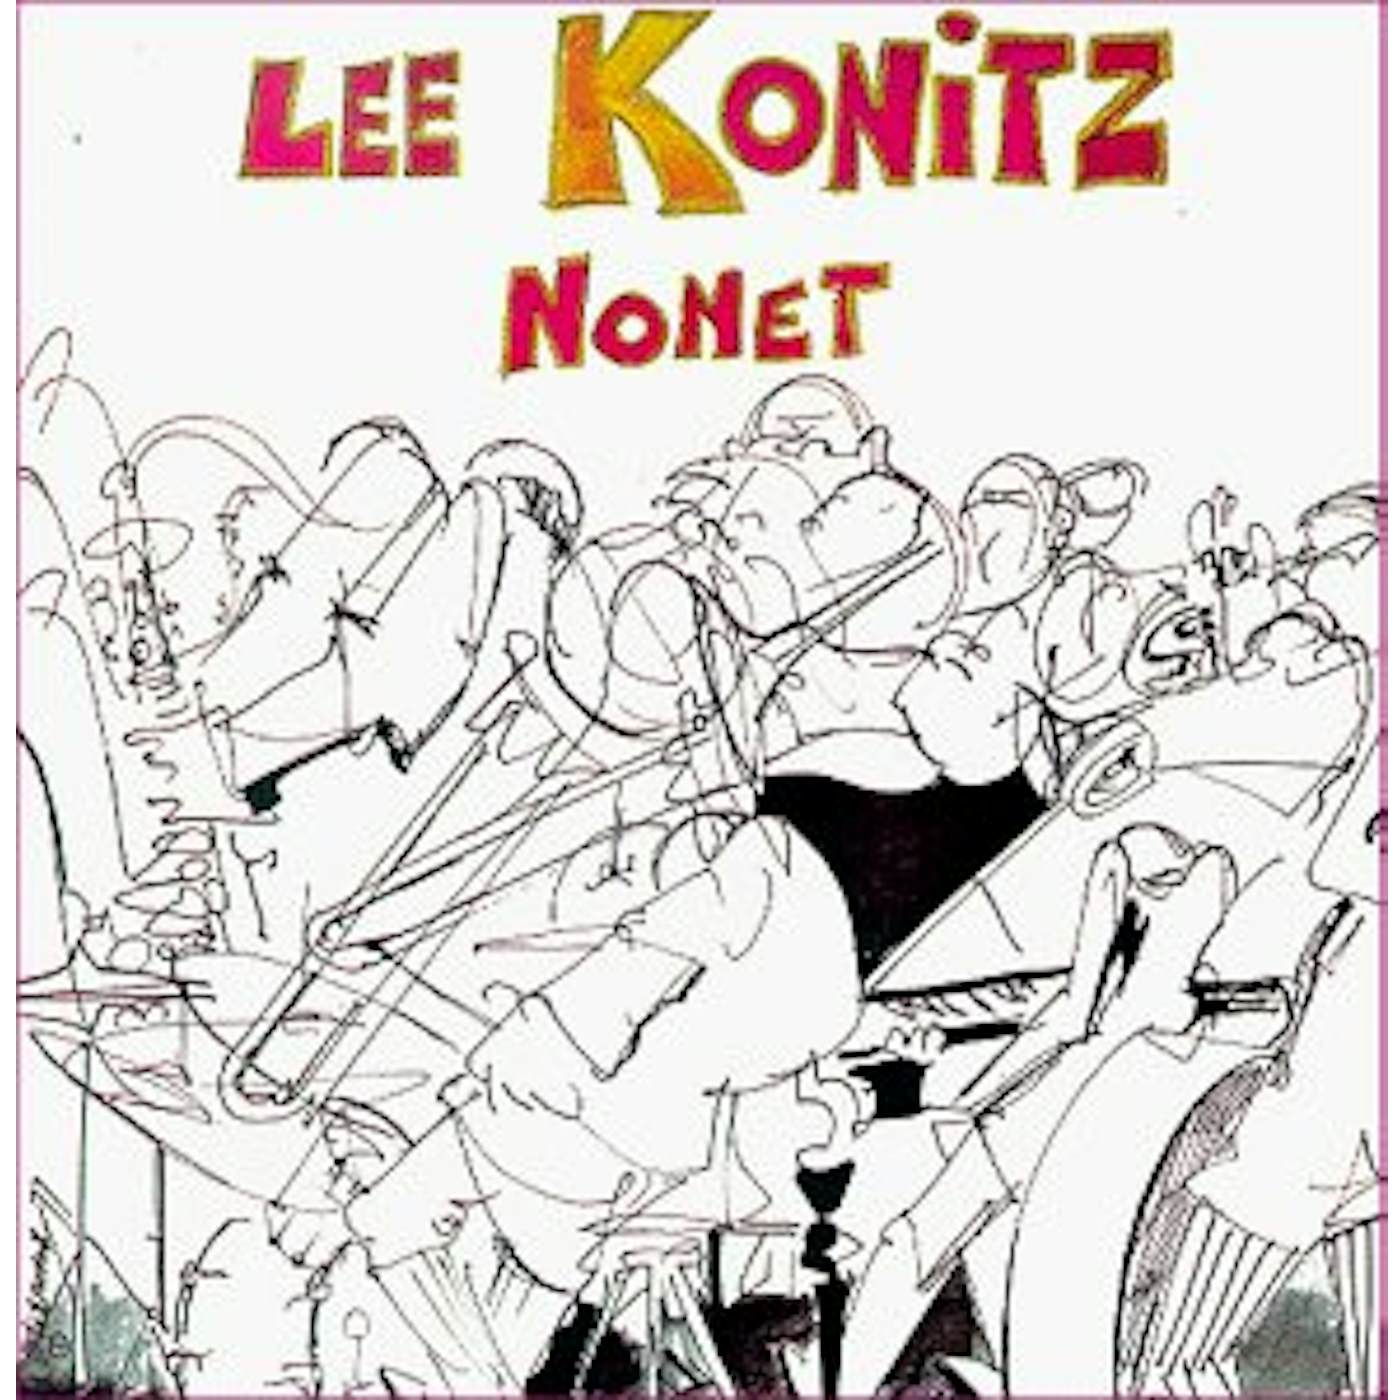 Lee Konitz NONET CD